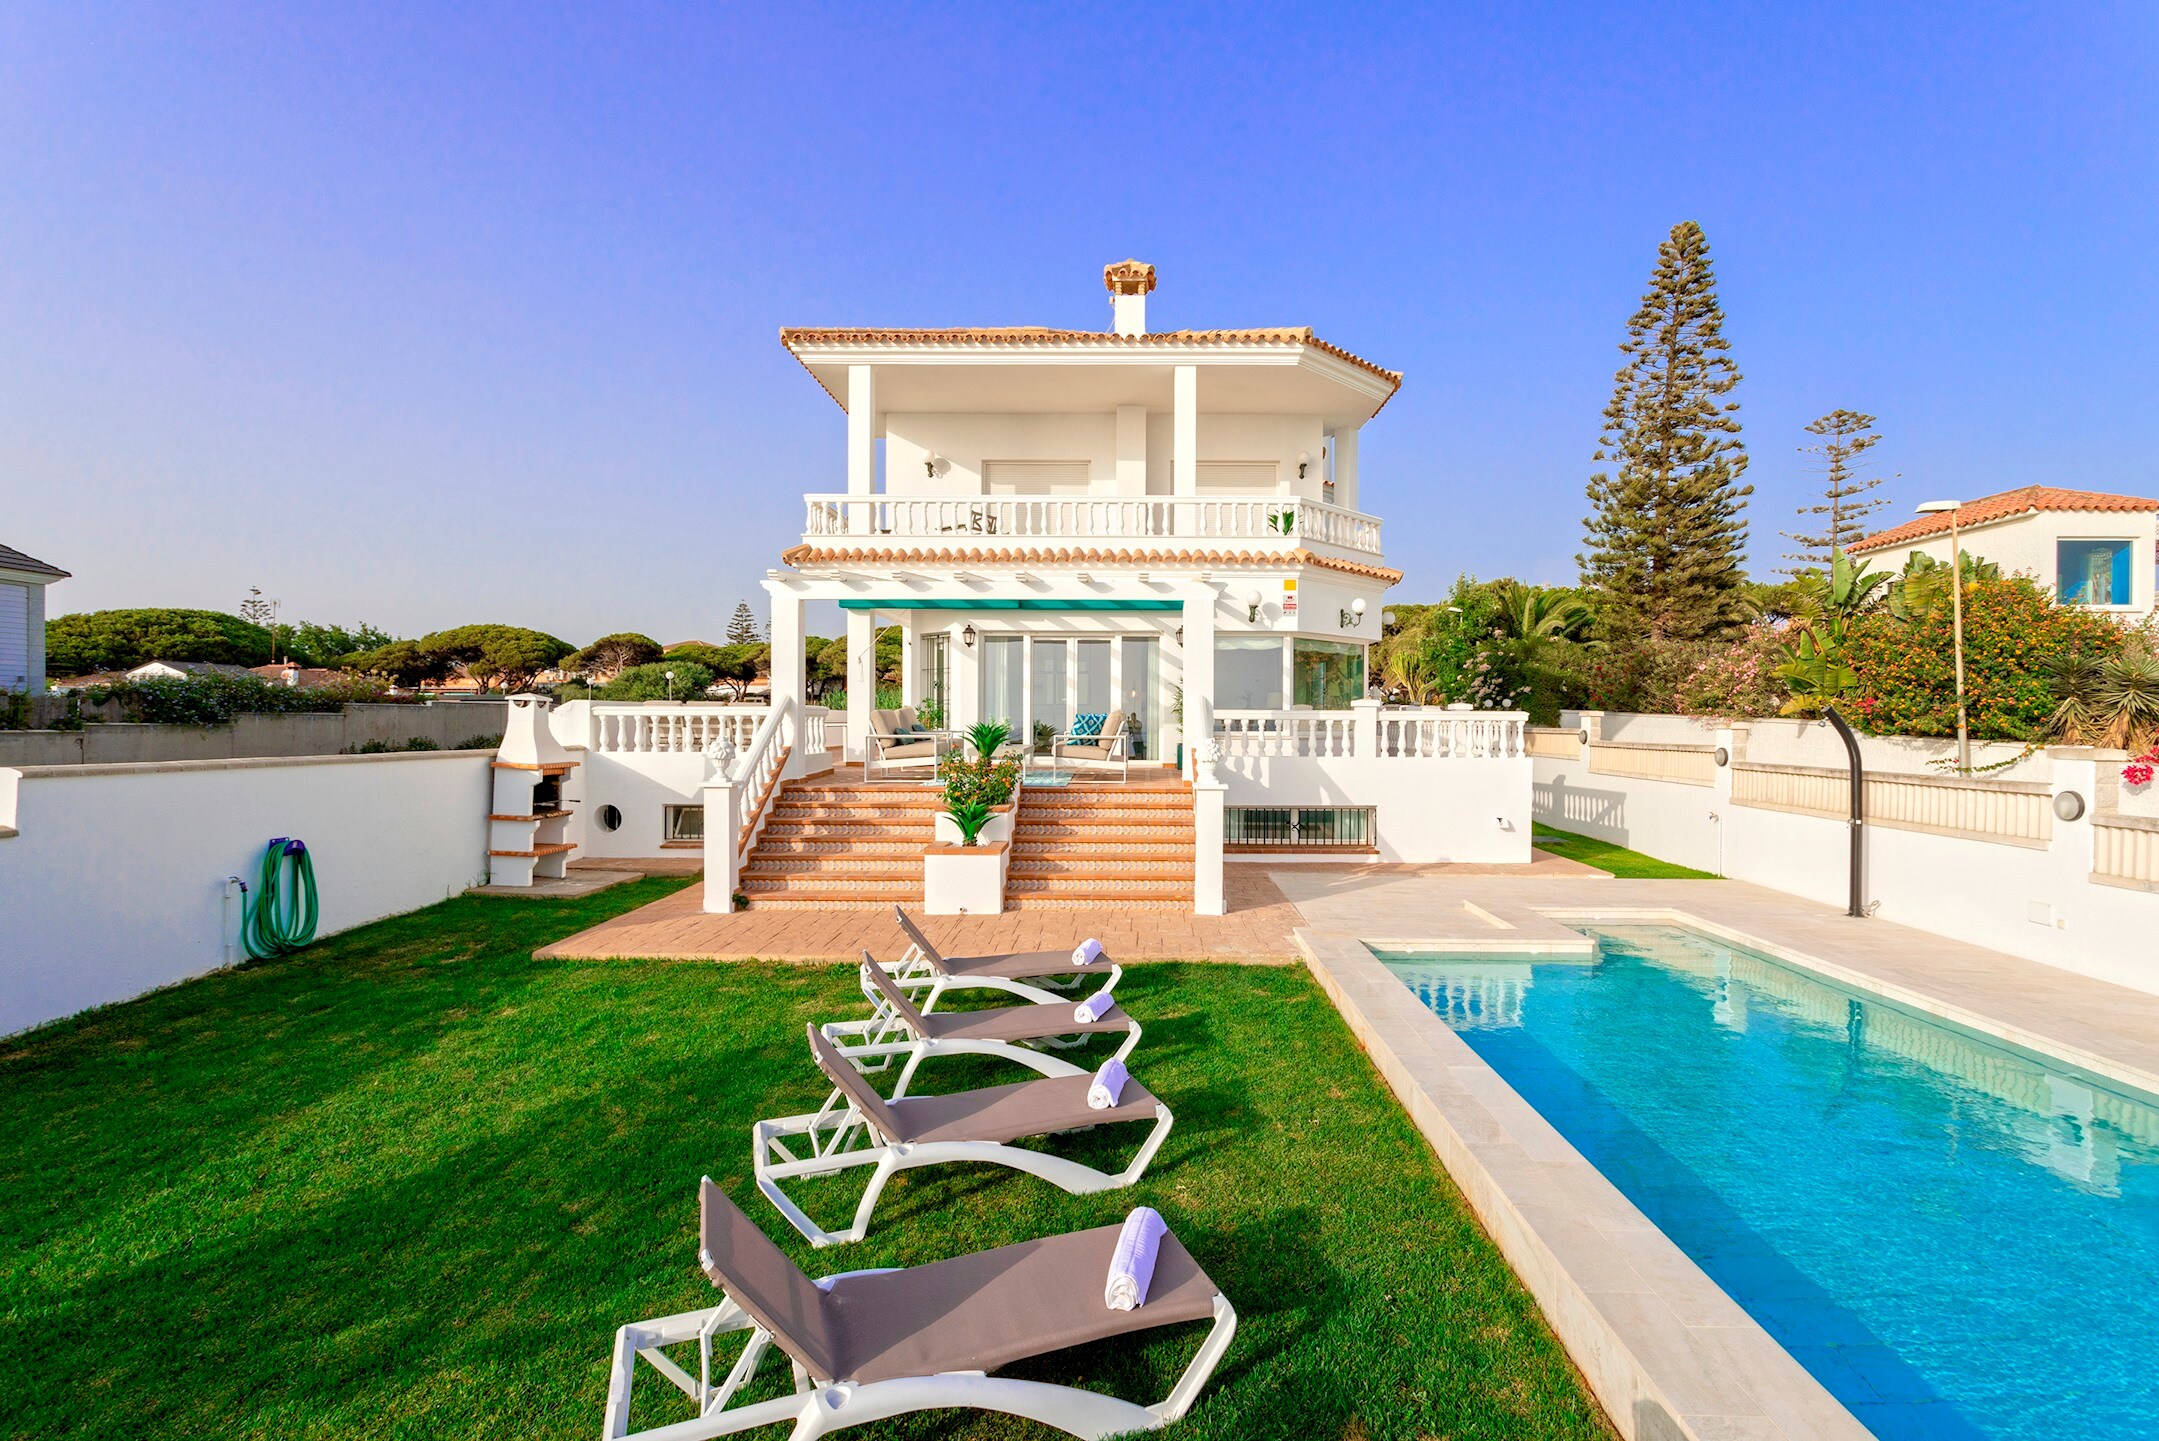 Property Image 2 - Big house with pool on the beach. La Barrosa